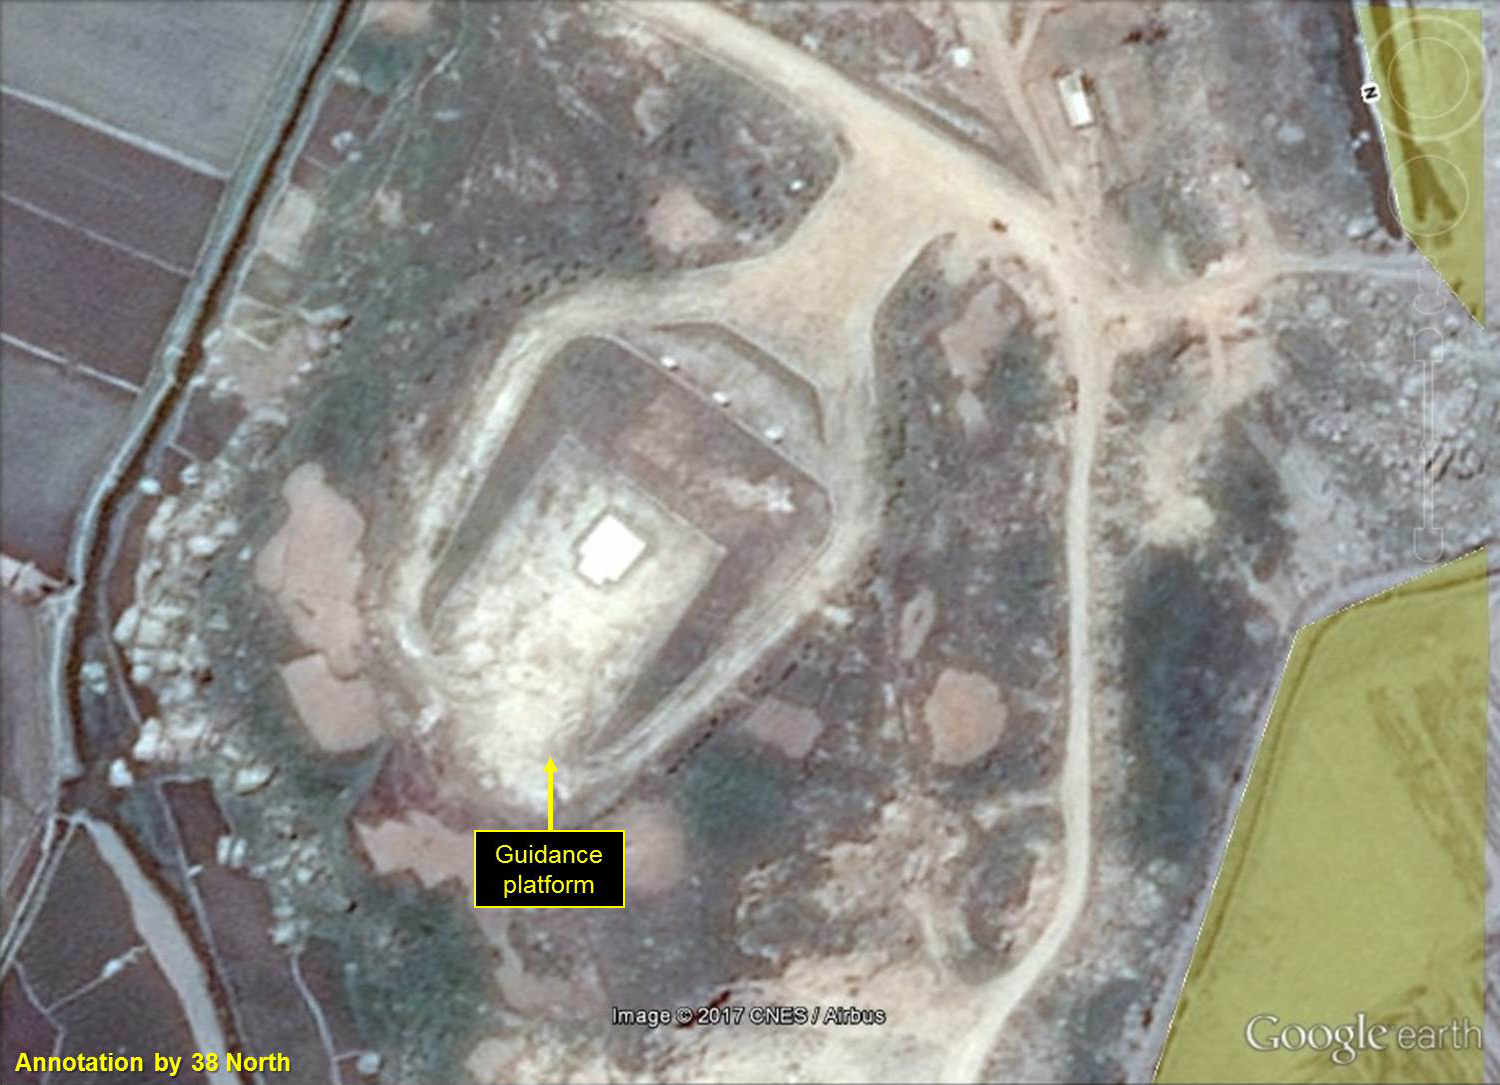 (Image: Google Earth)